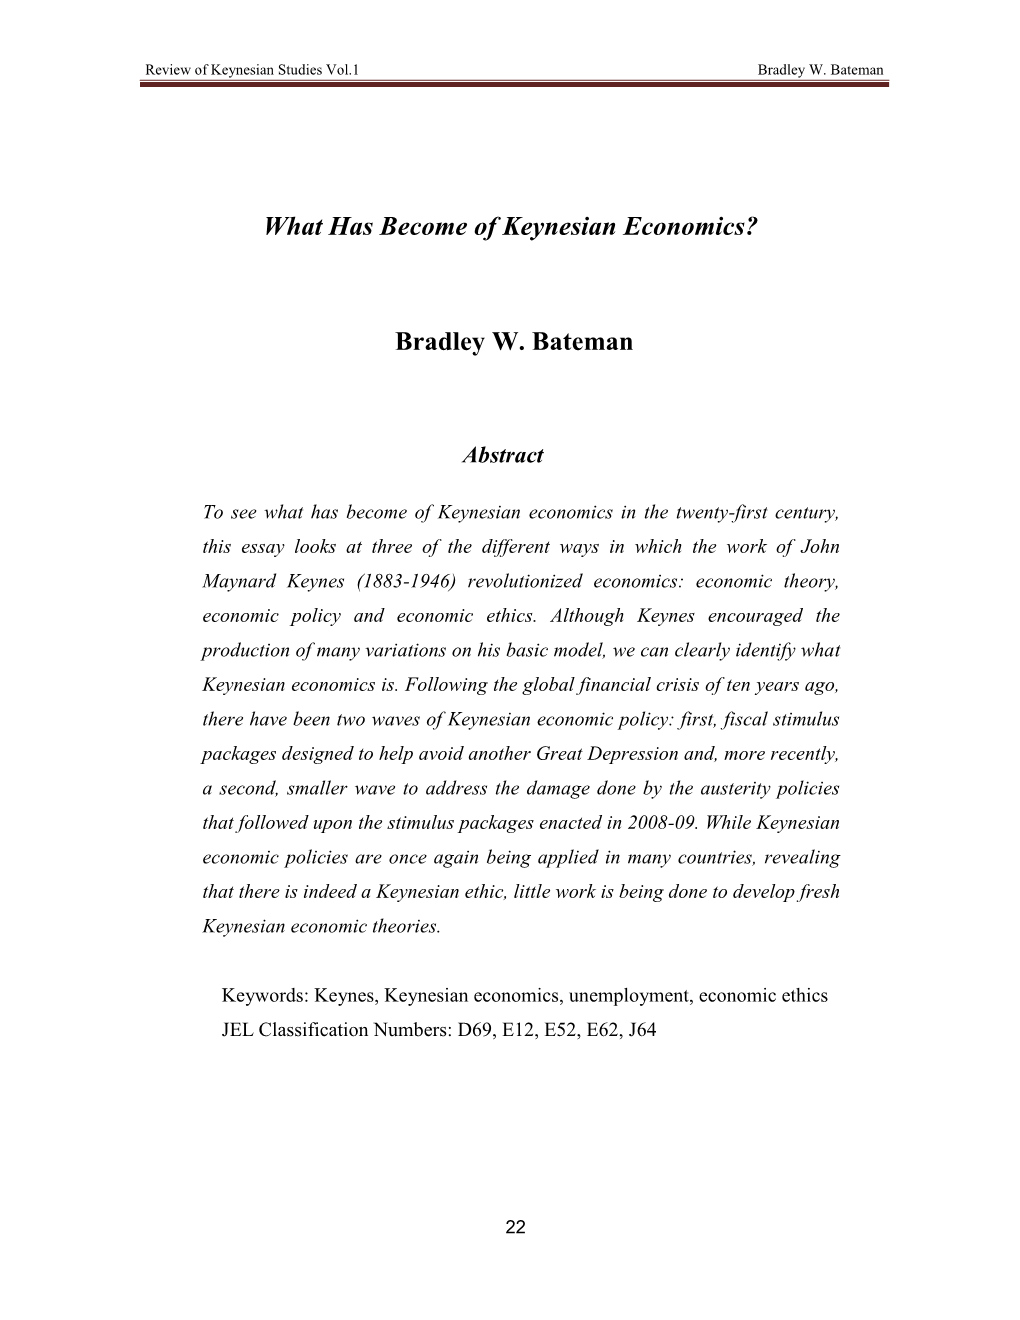 What Has Become of Keynesian Economics?